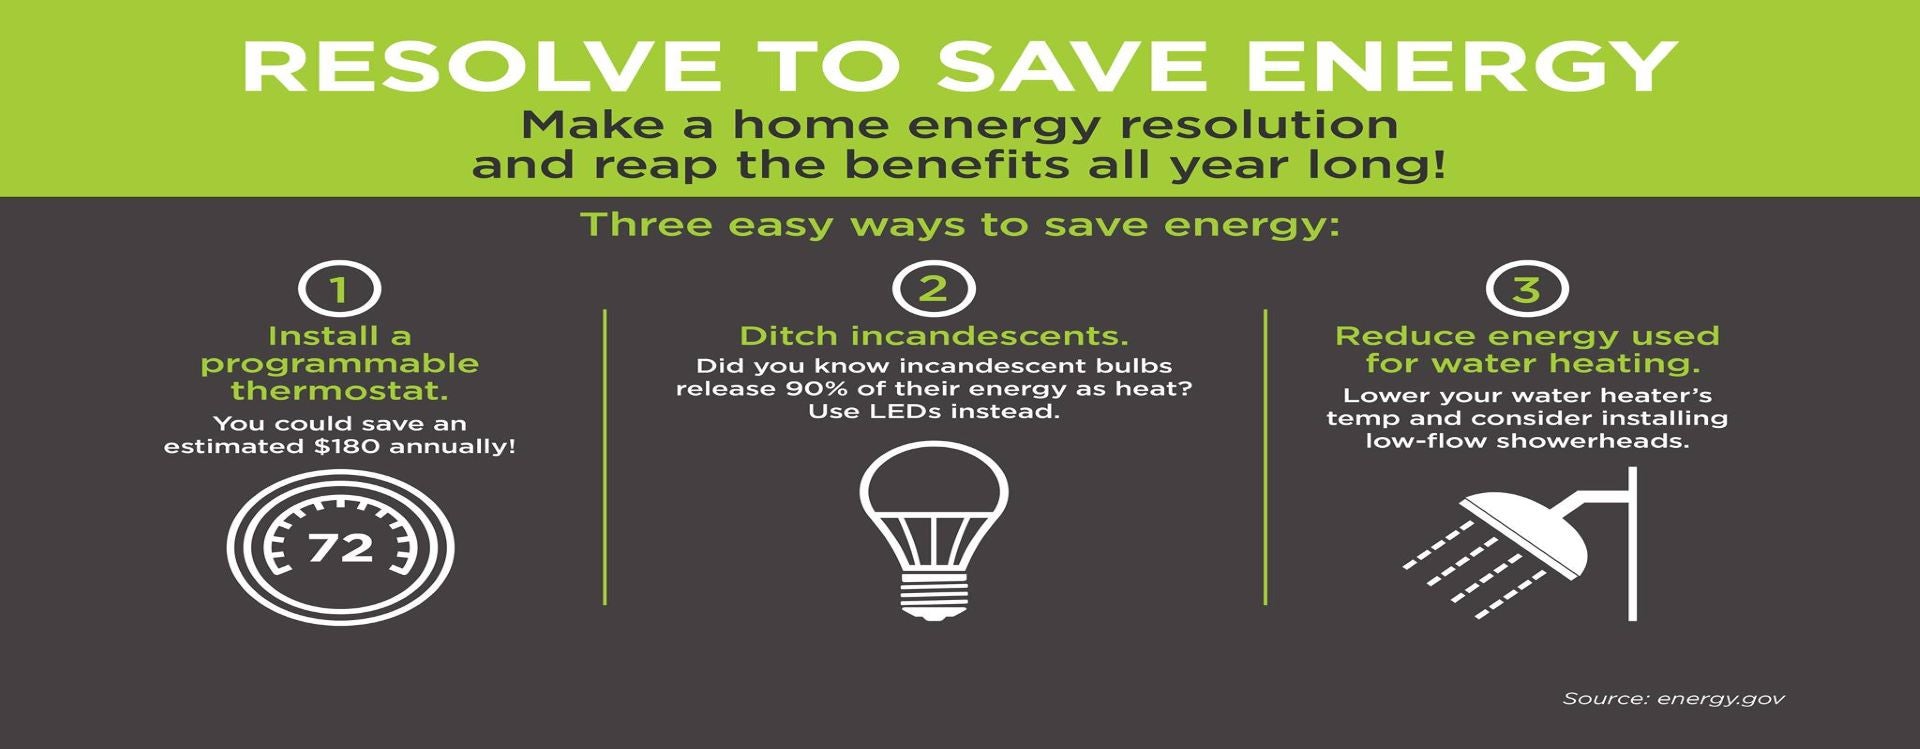 energy.gov Resolve to Save Energy Infographic